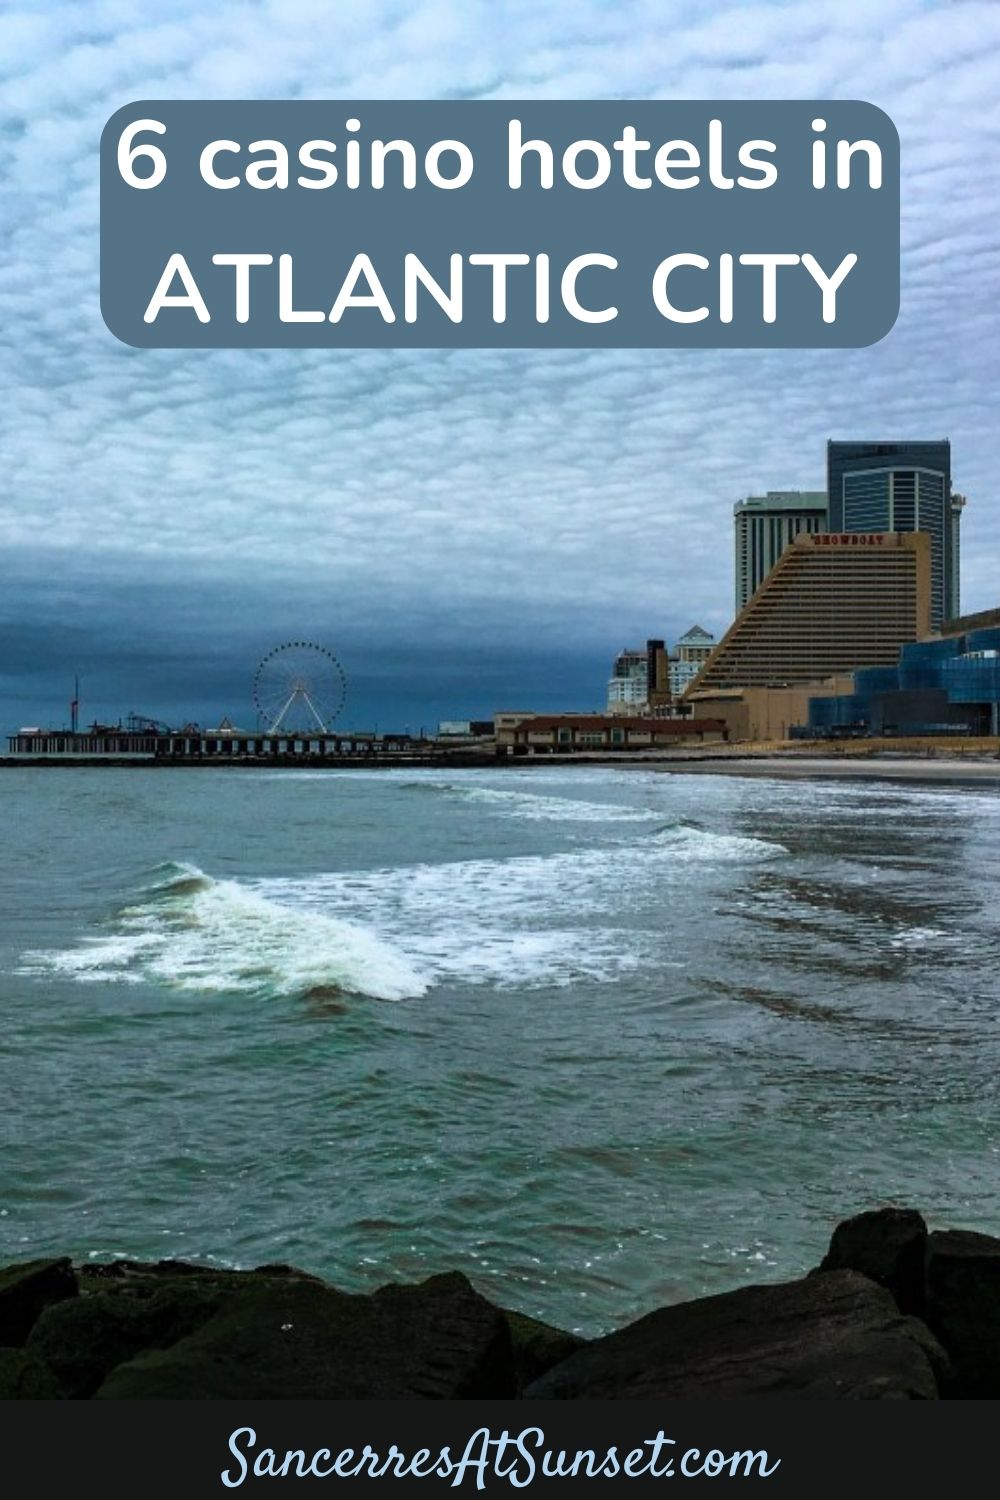 6 Casino Hotels on the Atlantic City Boardwalk